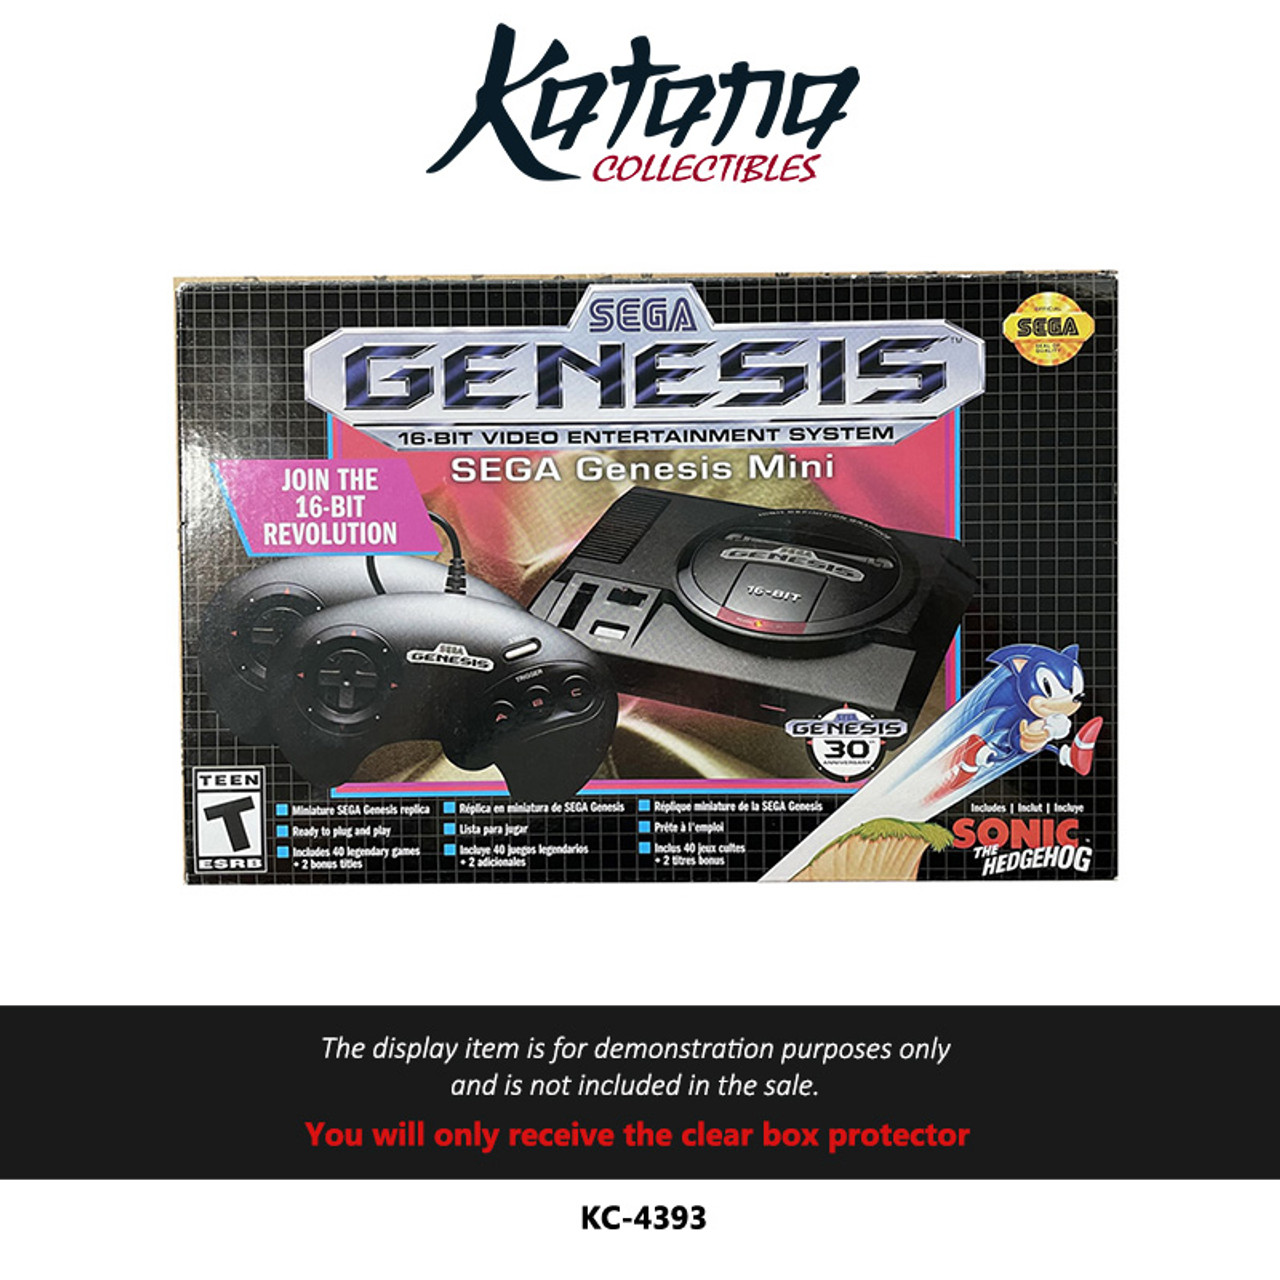 Katana Collectibles Protector For Sega Genesis Mini